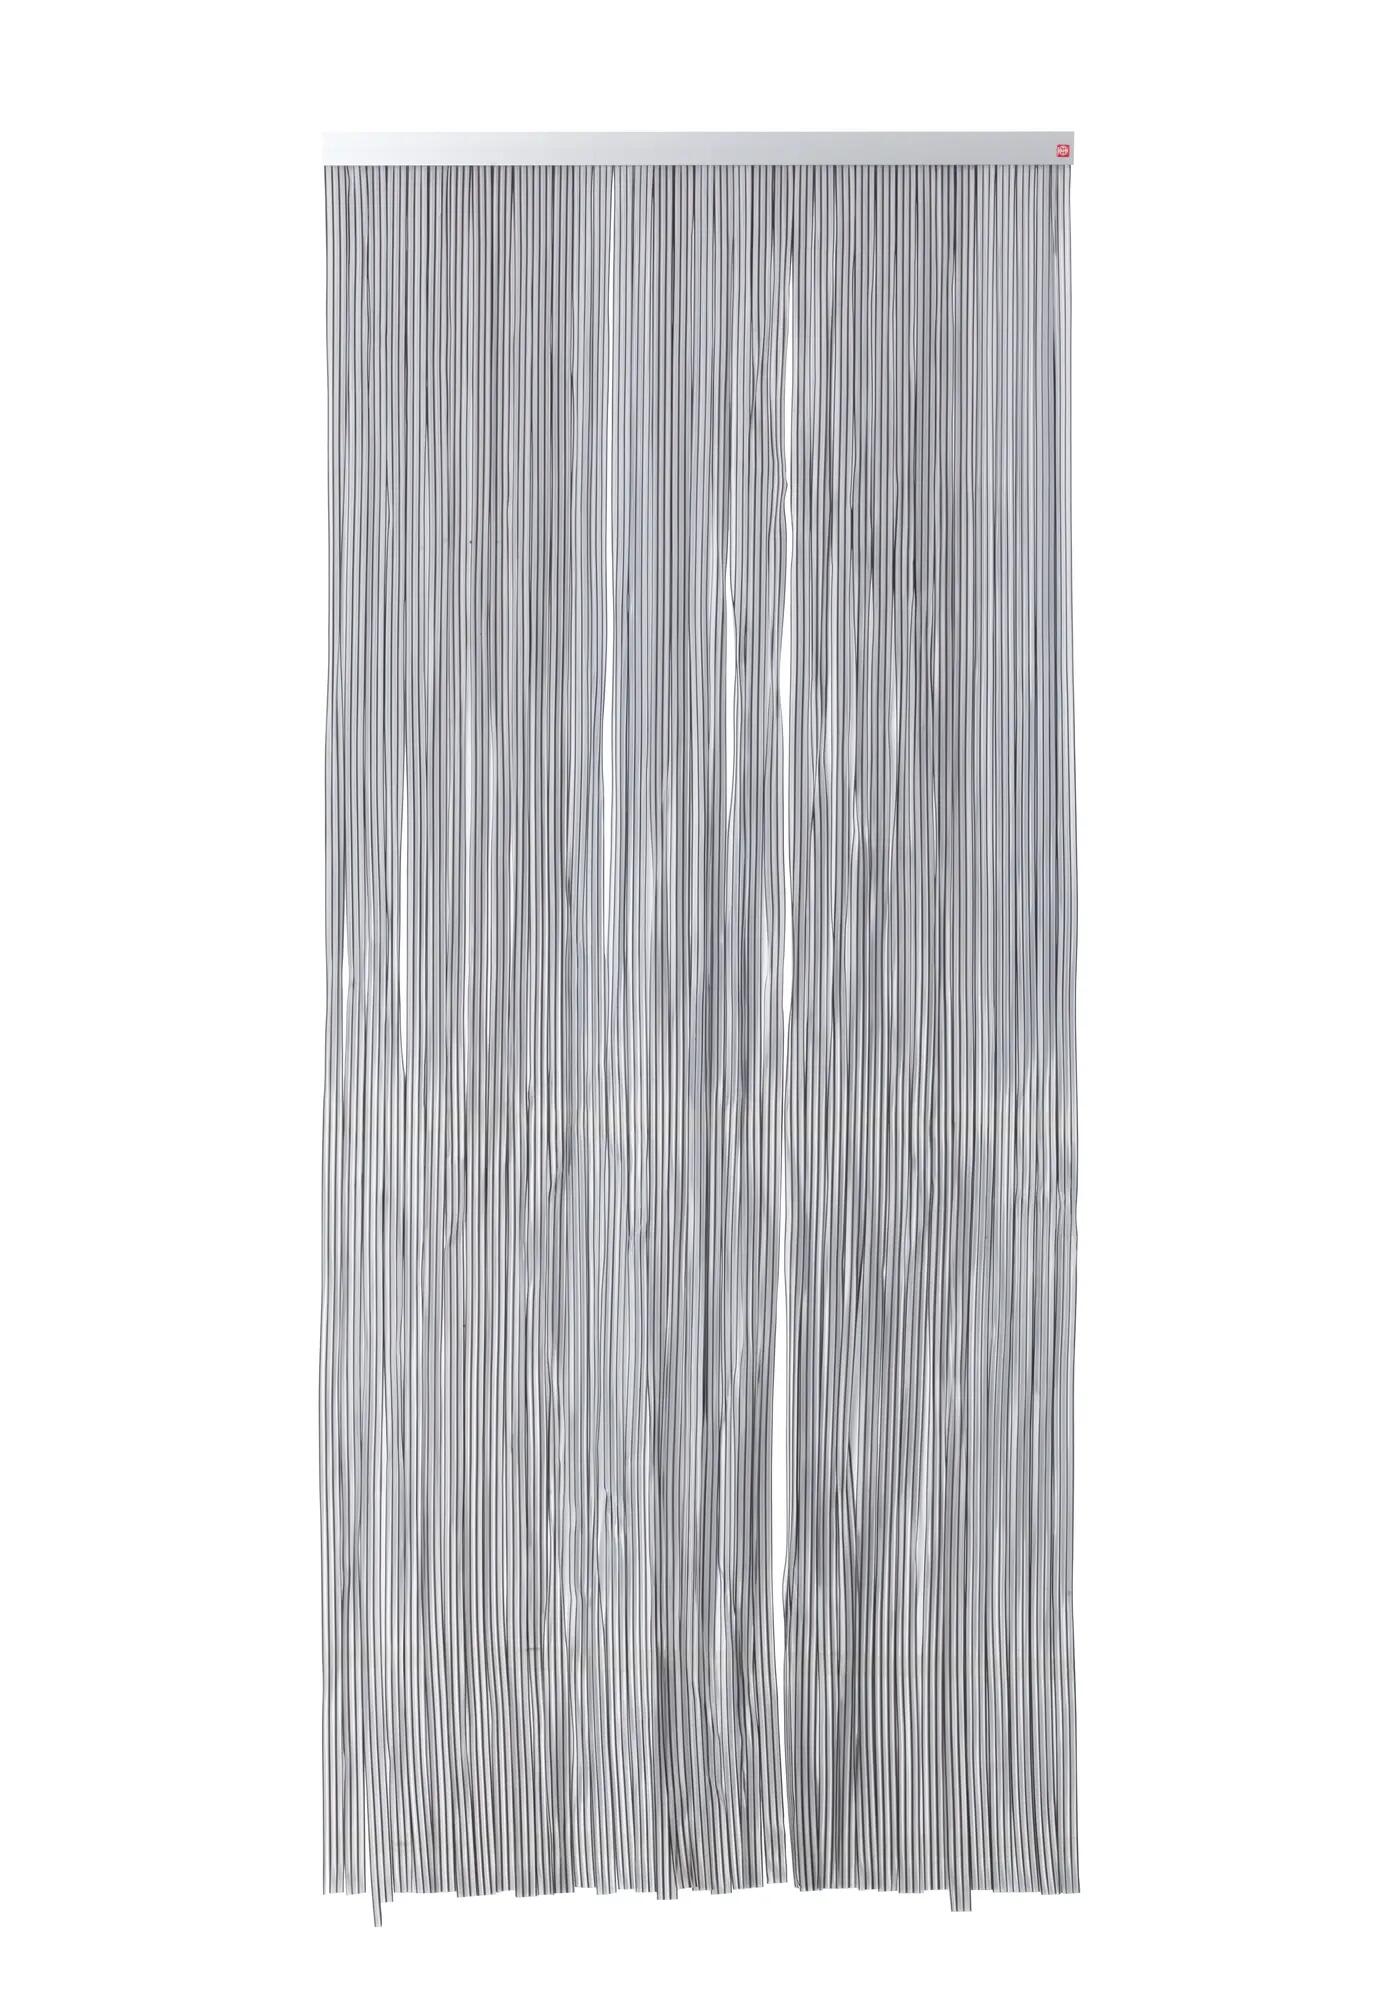 Cortina de puerta pvc cintas negro 90 x 210 cm